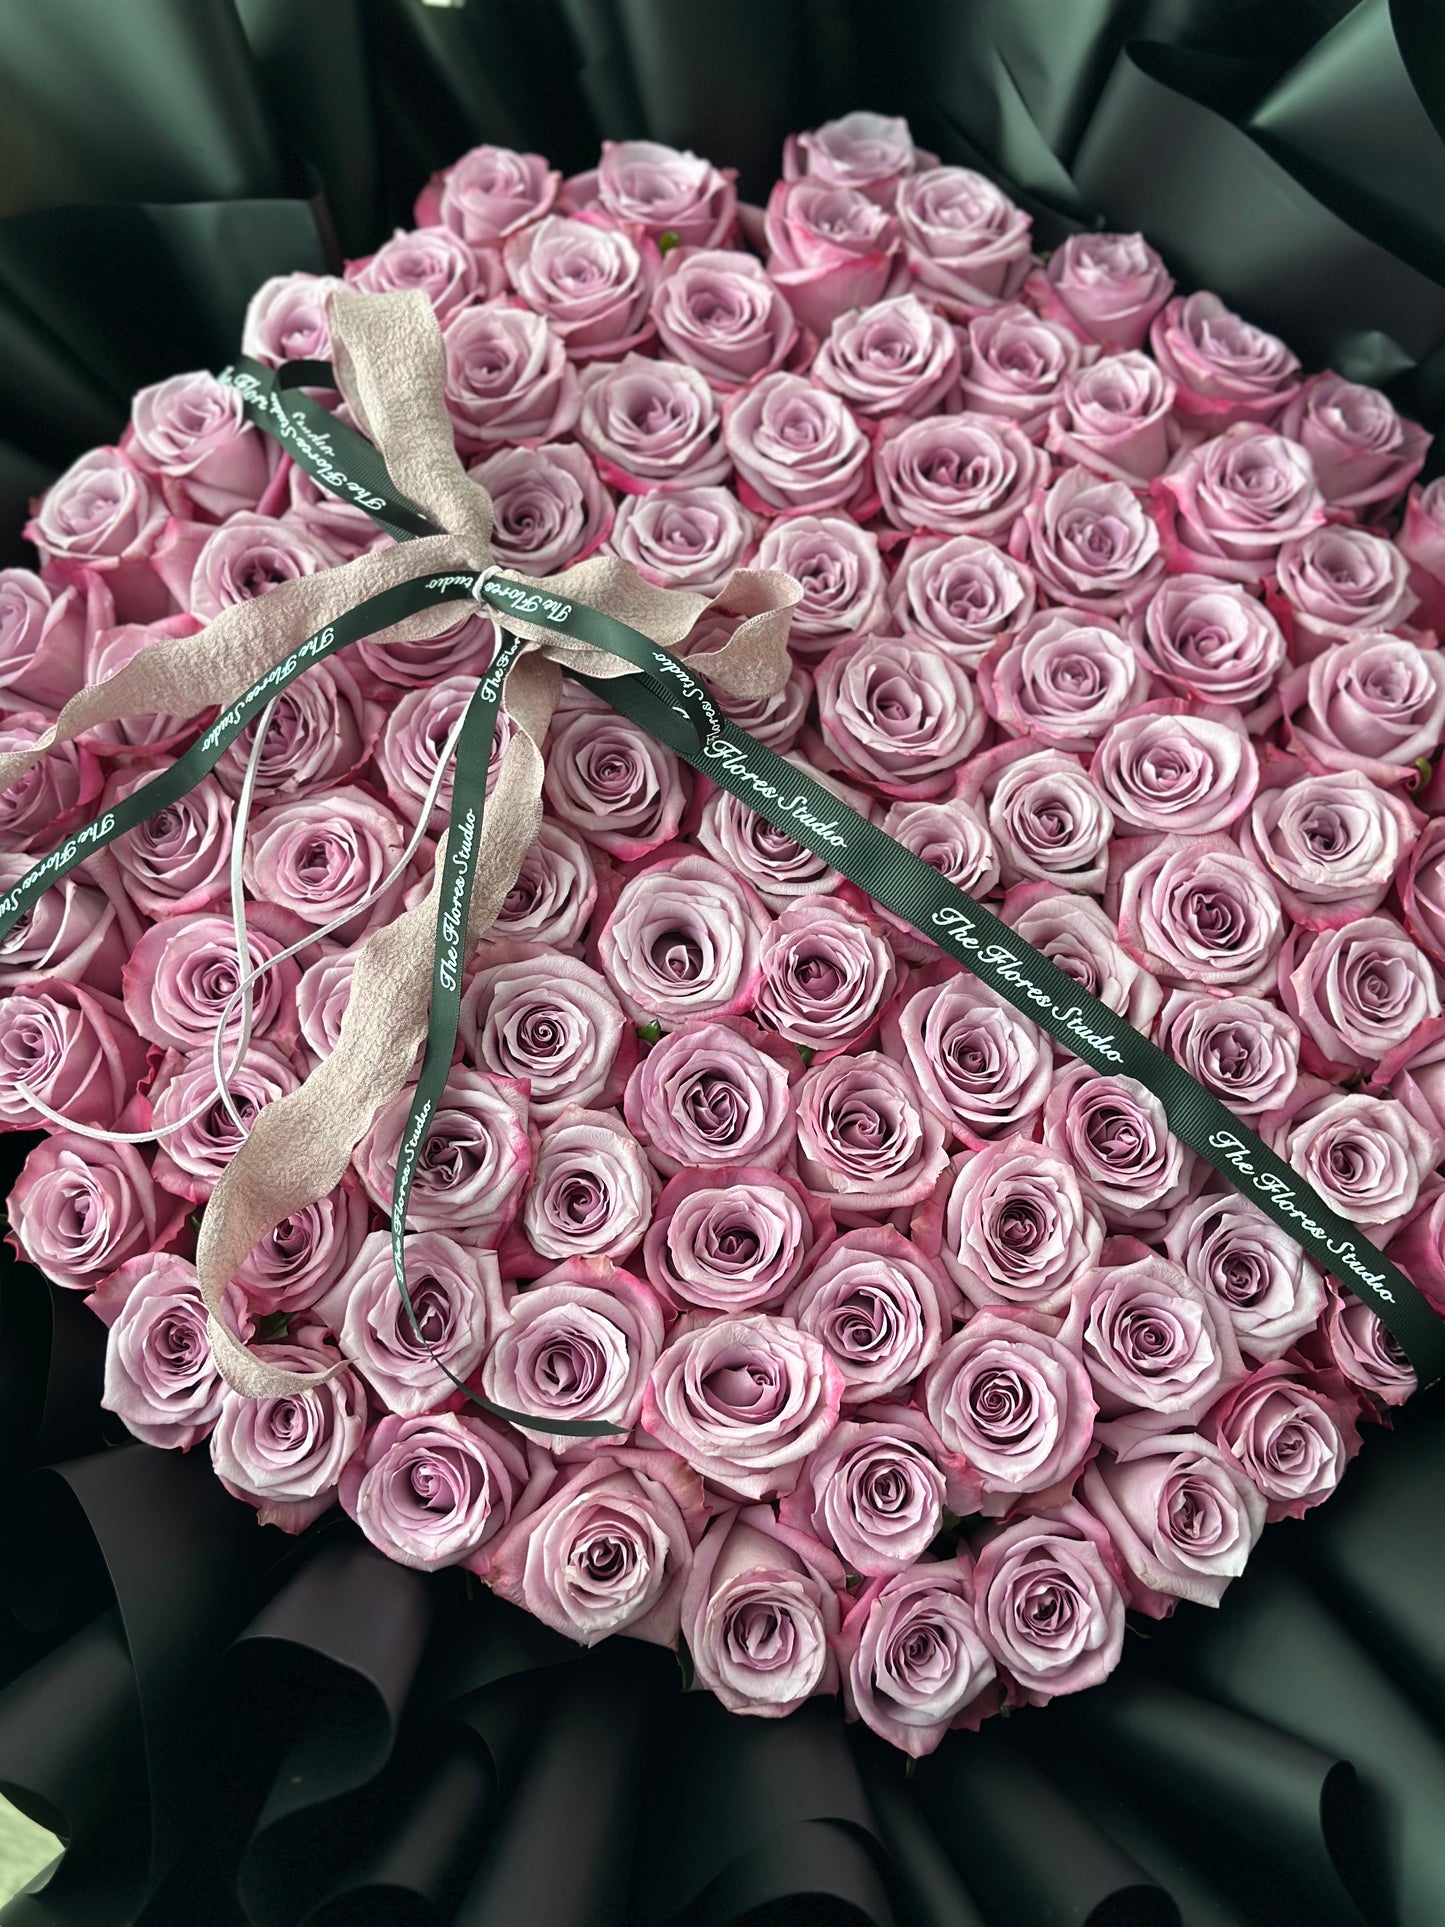 99 roses bouquet-purple pink